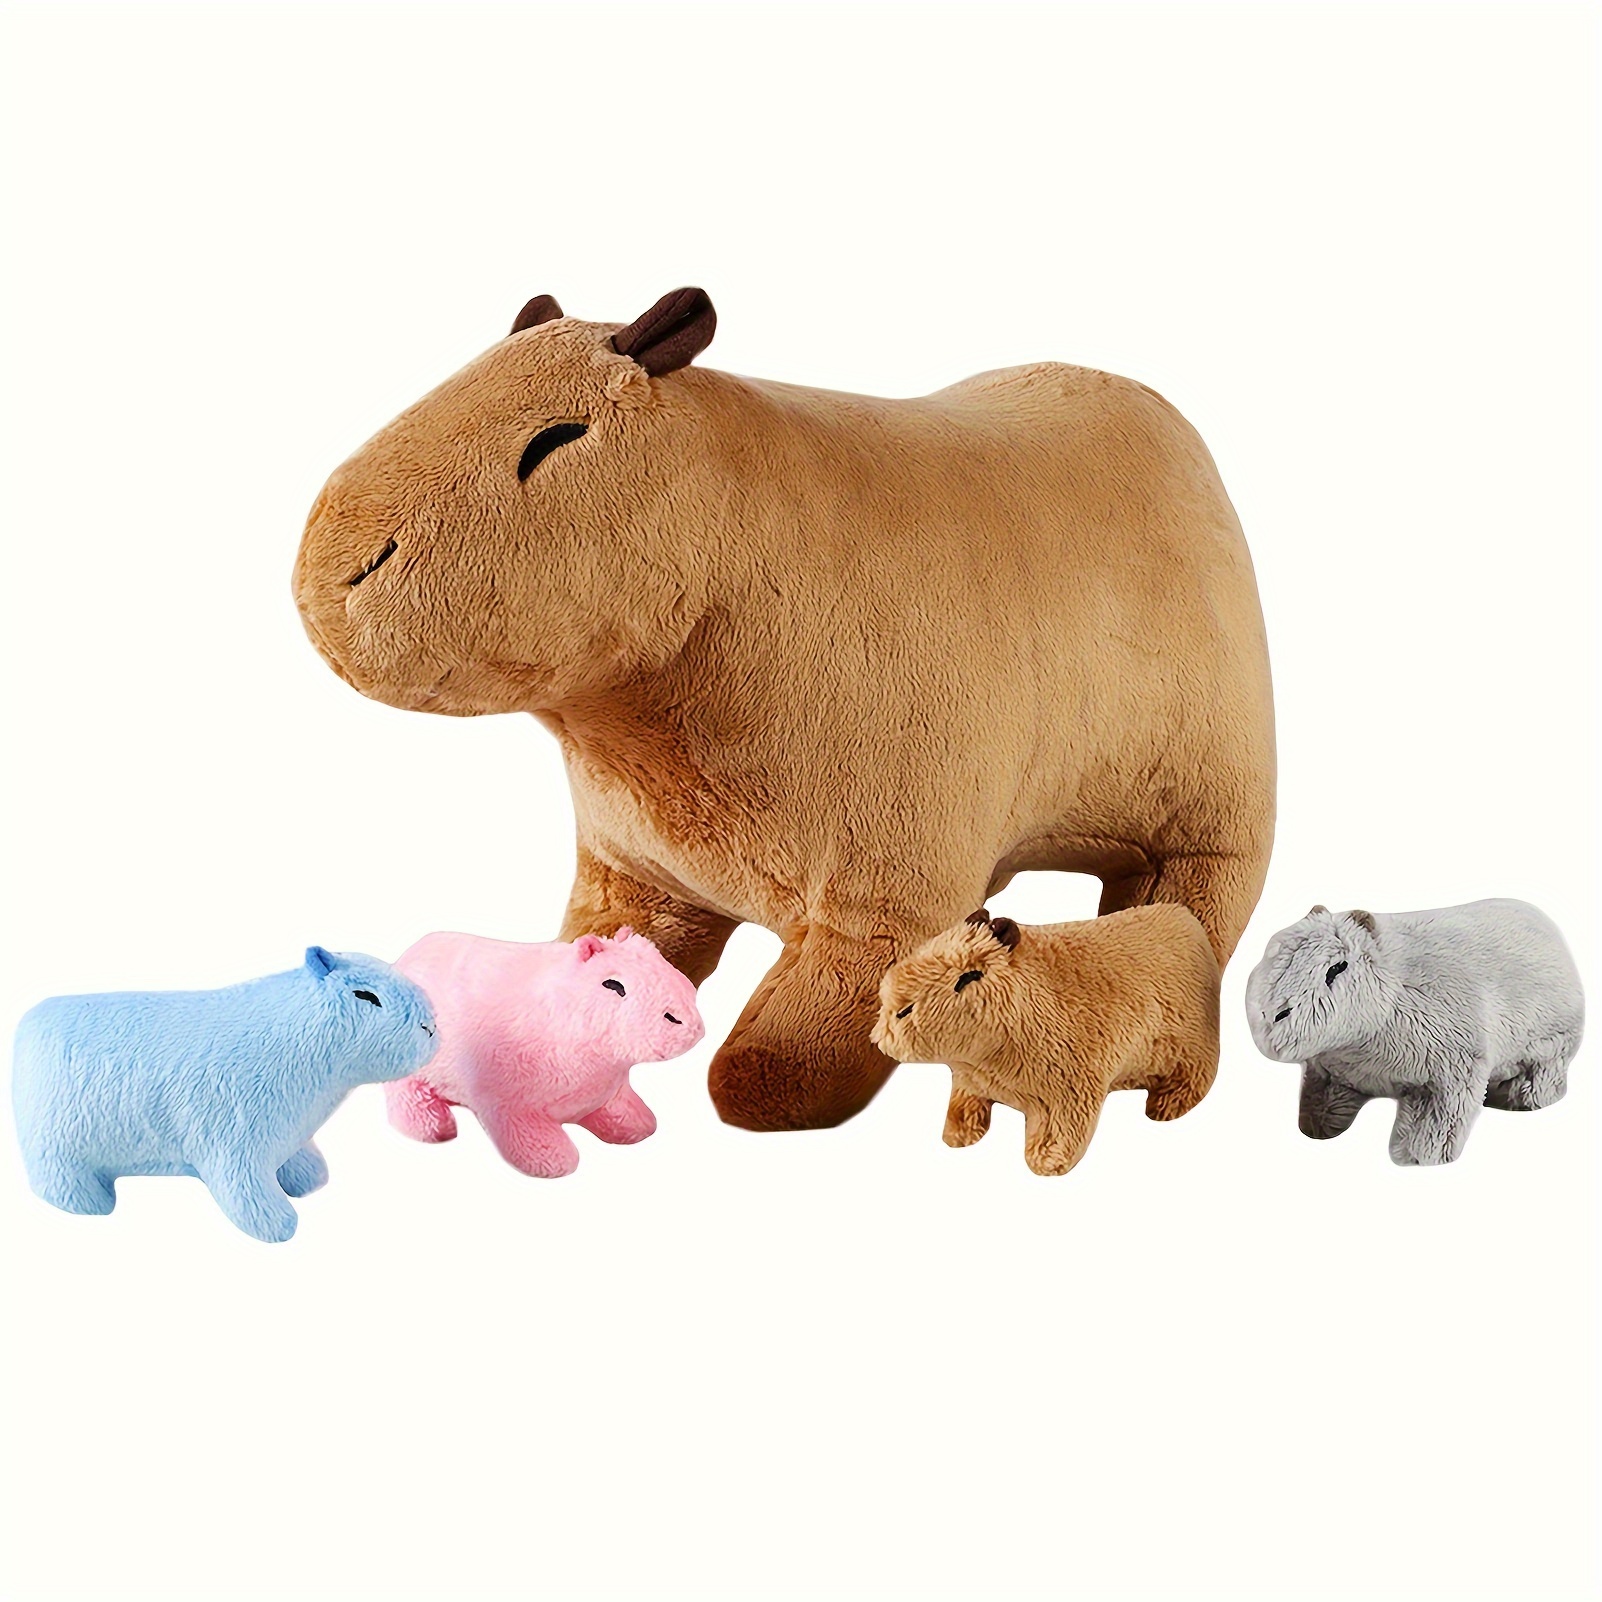 

Kawaii Simulation Animal Capybara Plush Toy With 4 Baby Plush In Her Tummy Cute Capybara Plush Dolls Stuffed Animals For Children - Gift Present Animal Plush Toy Pillows For Children Birthday Gifts